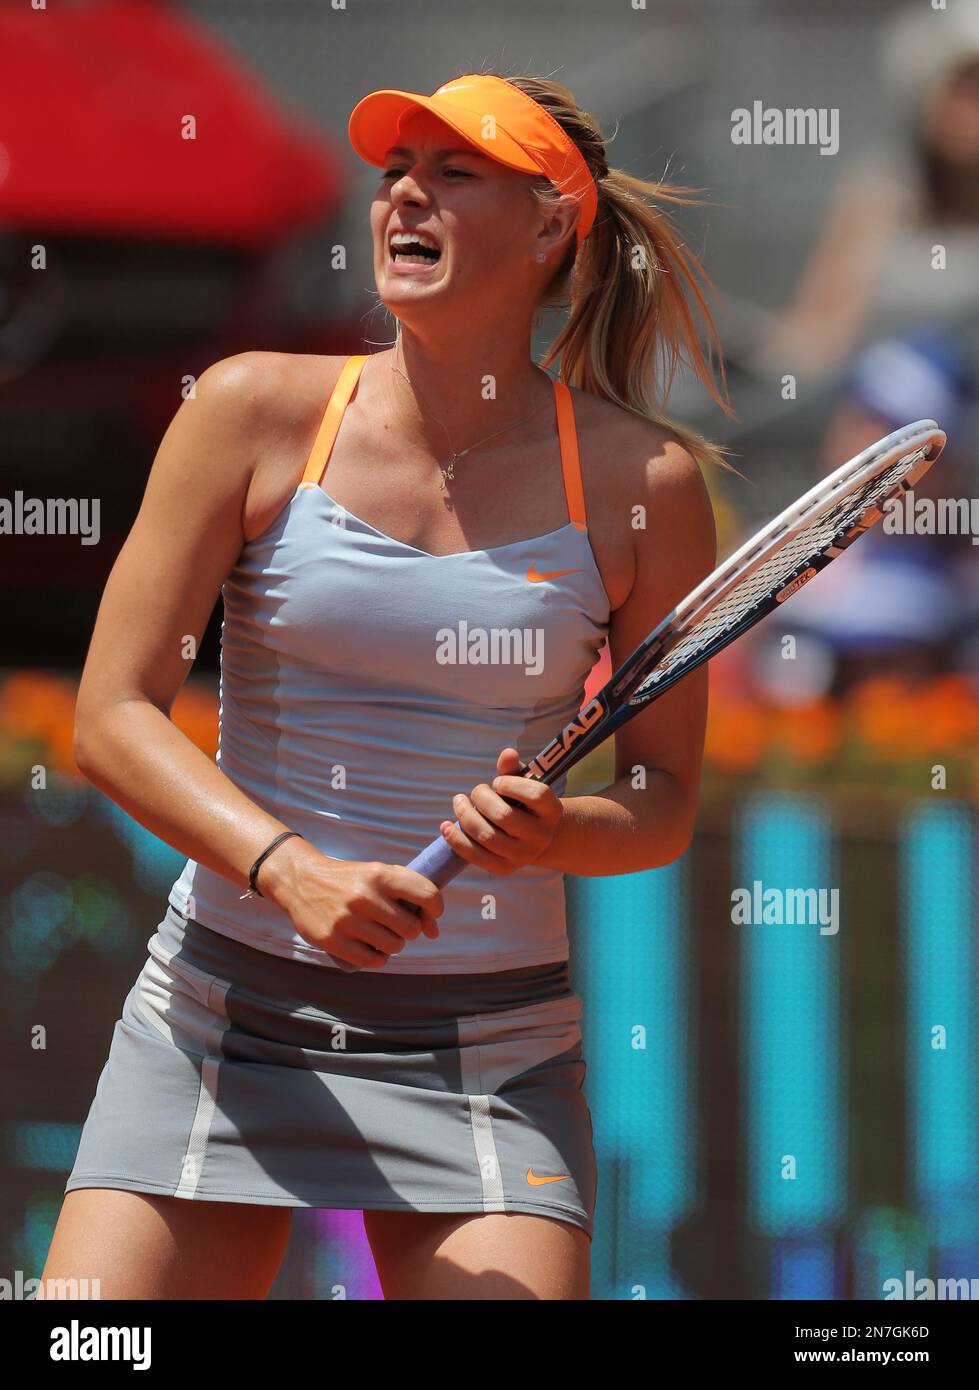 Justine Henin-Hardenne of Belgium(L) defeated Maria Sharpova of Russia(R)  7-5, 6-2 in the finals of the Dubai Tennis Championships in Dubai, United  Arab Emirates on February 25, 2006. Justine won US$ 159,000.00